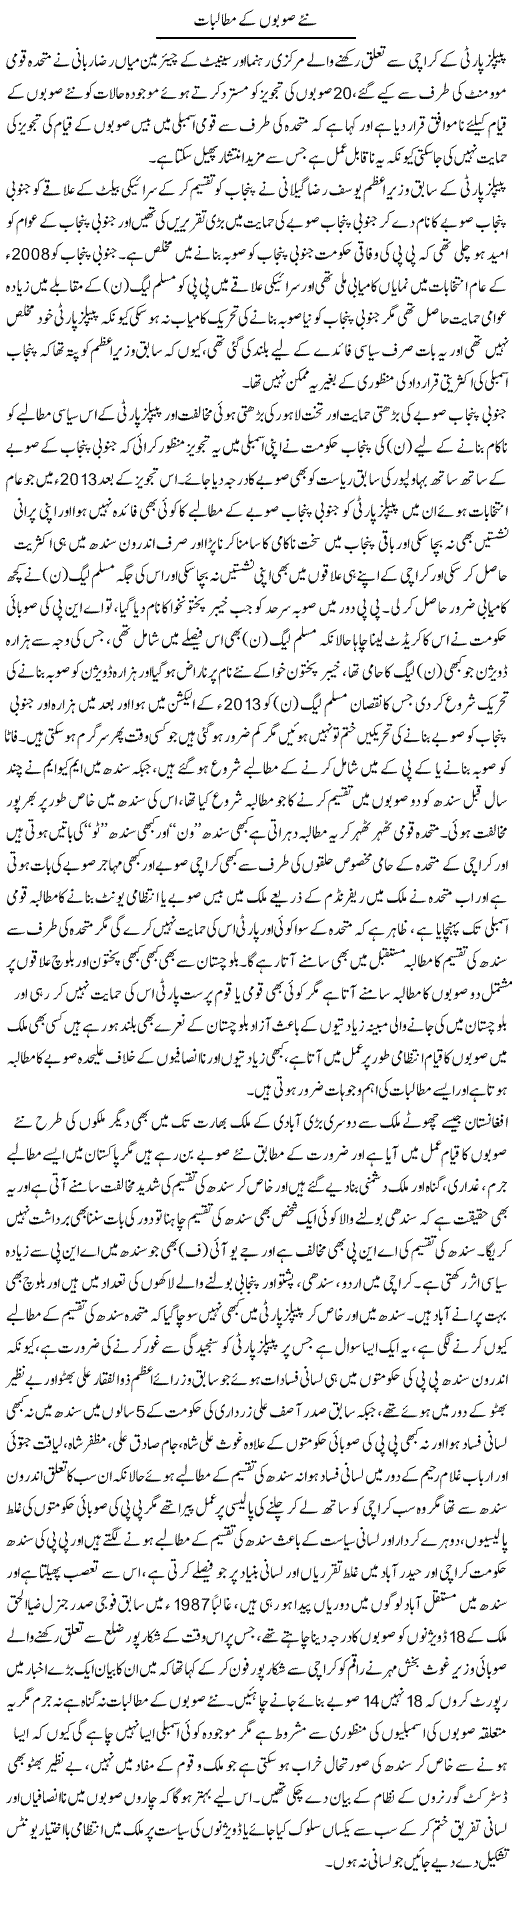 Nae Subon Ke Mutalibaat | Muhammad Saeed Araeen | Daily Urdu Columns